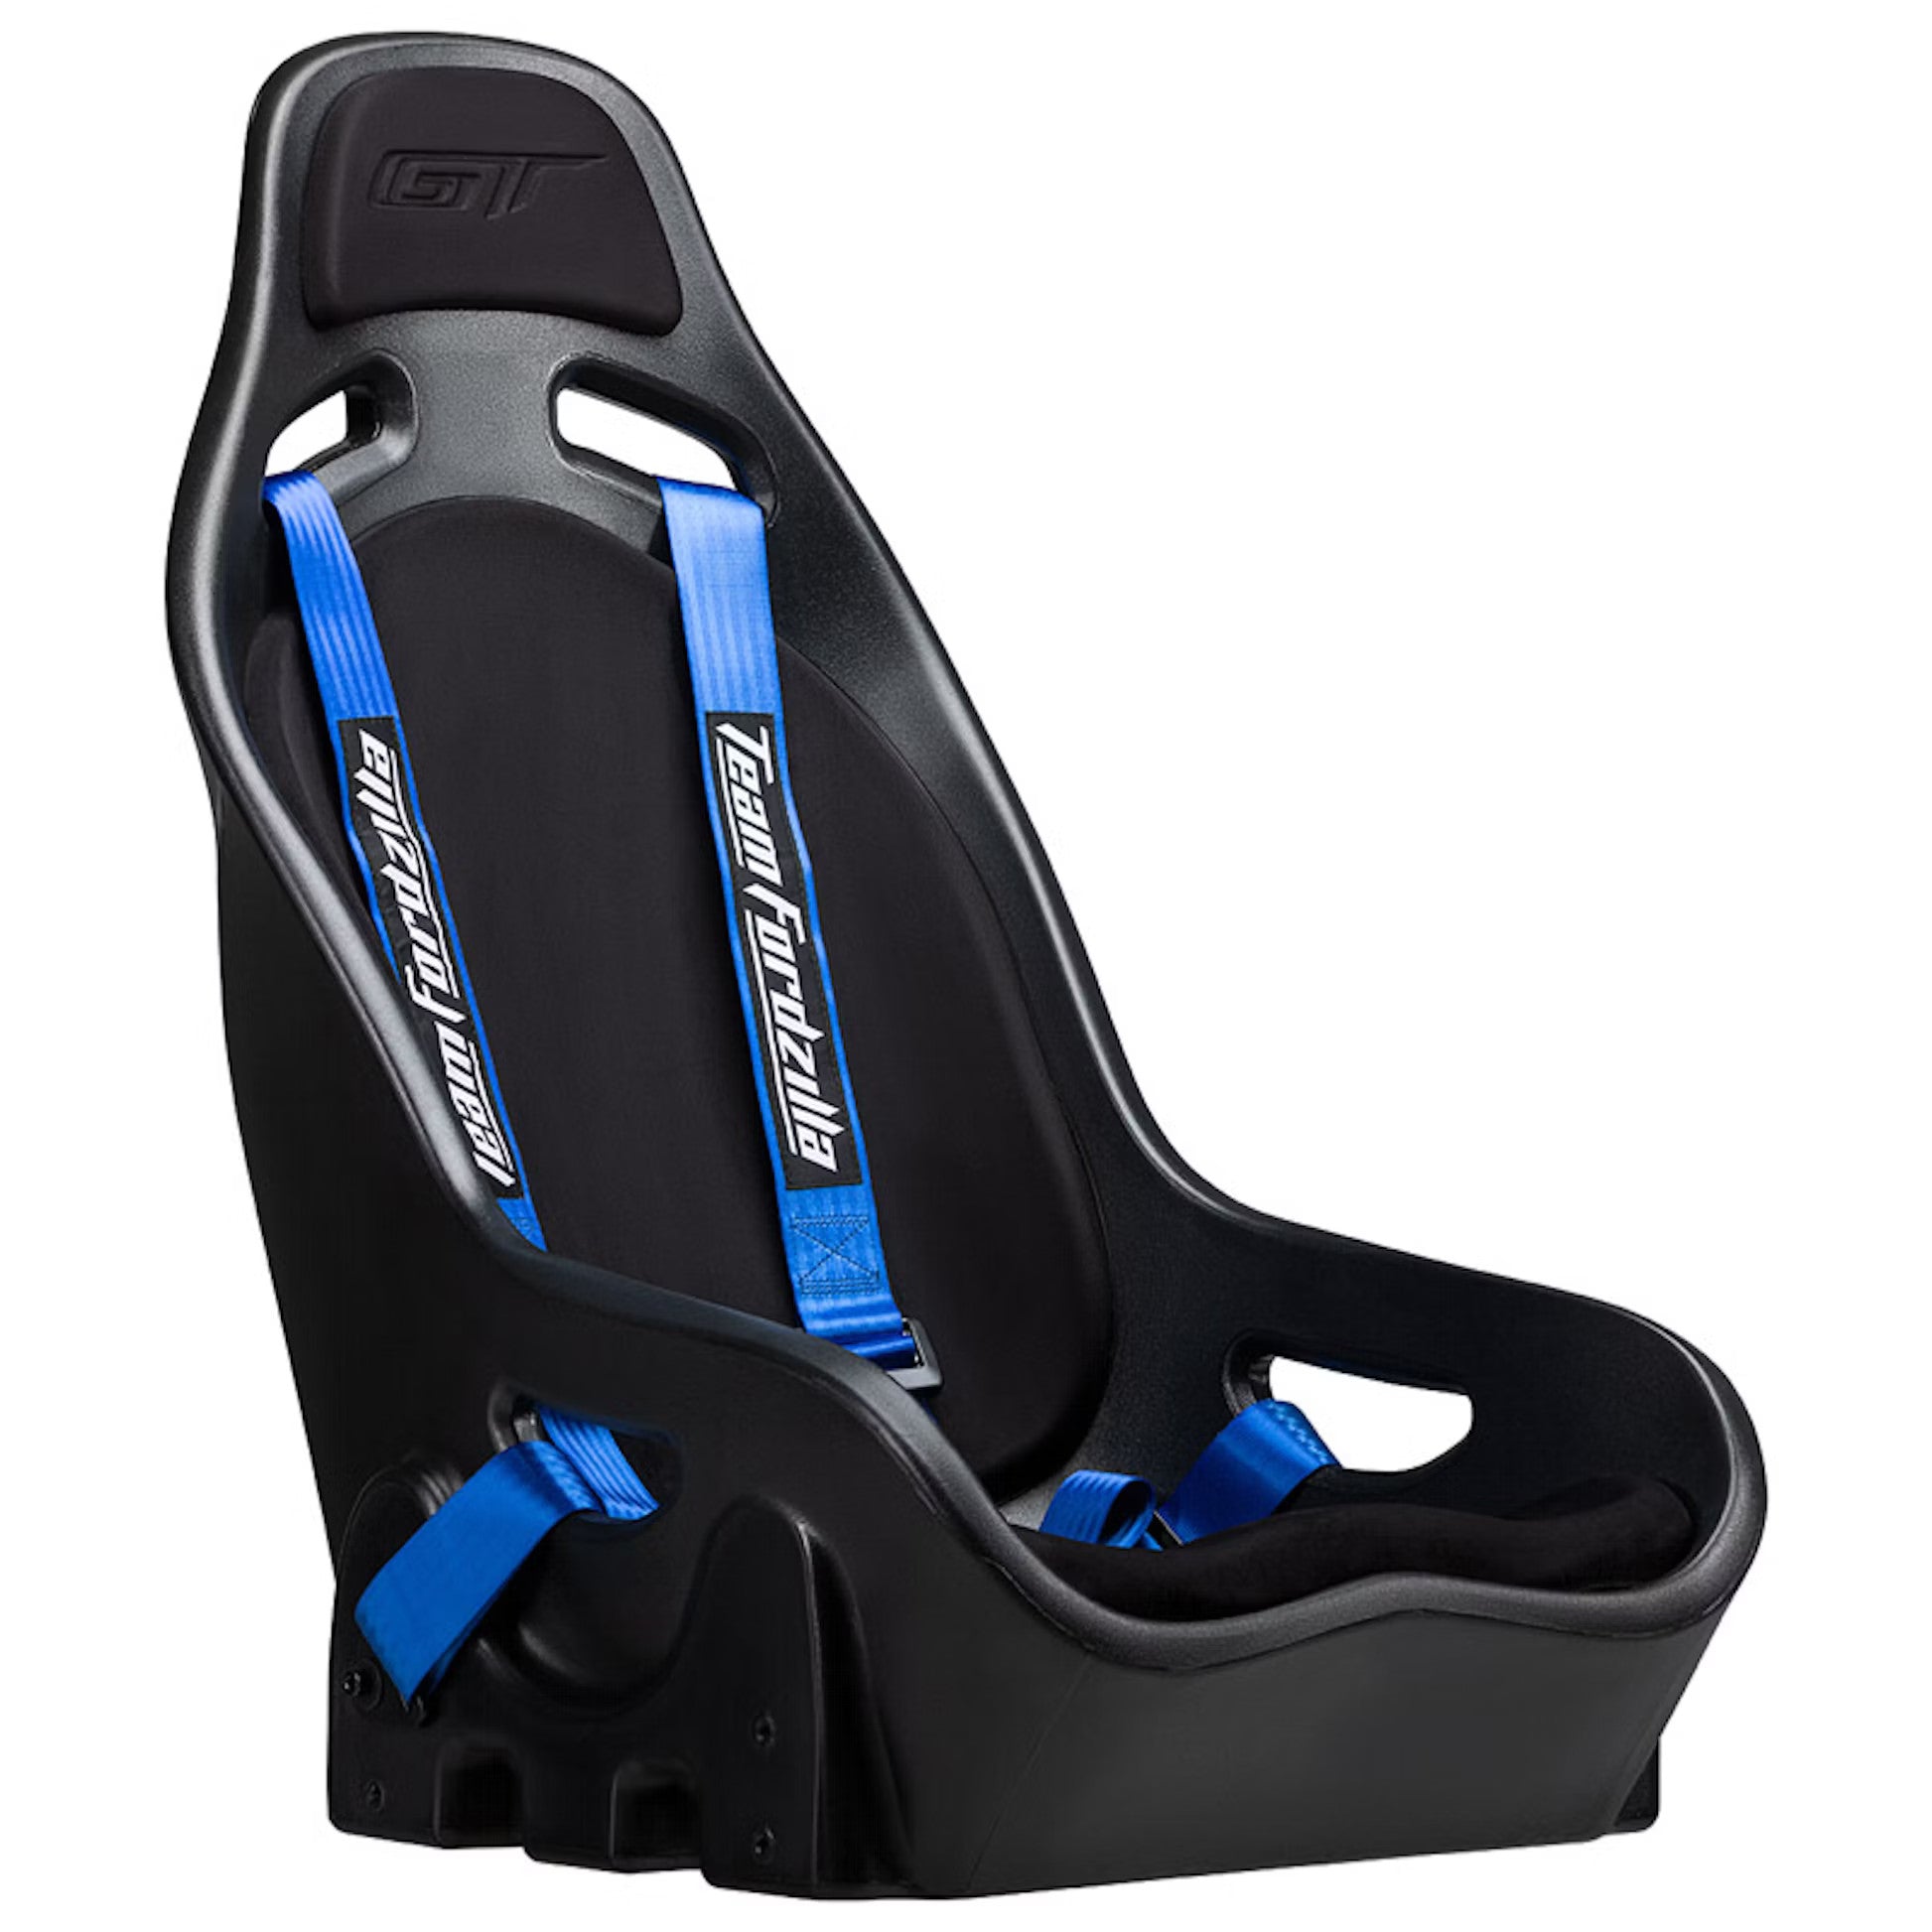 Next Level Racing ELITE ES1 Racing Simulator Seat FORD GT Edition